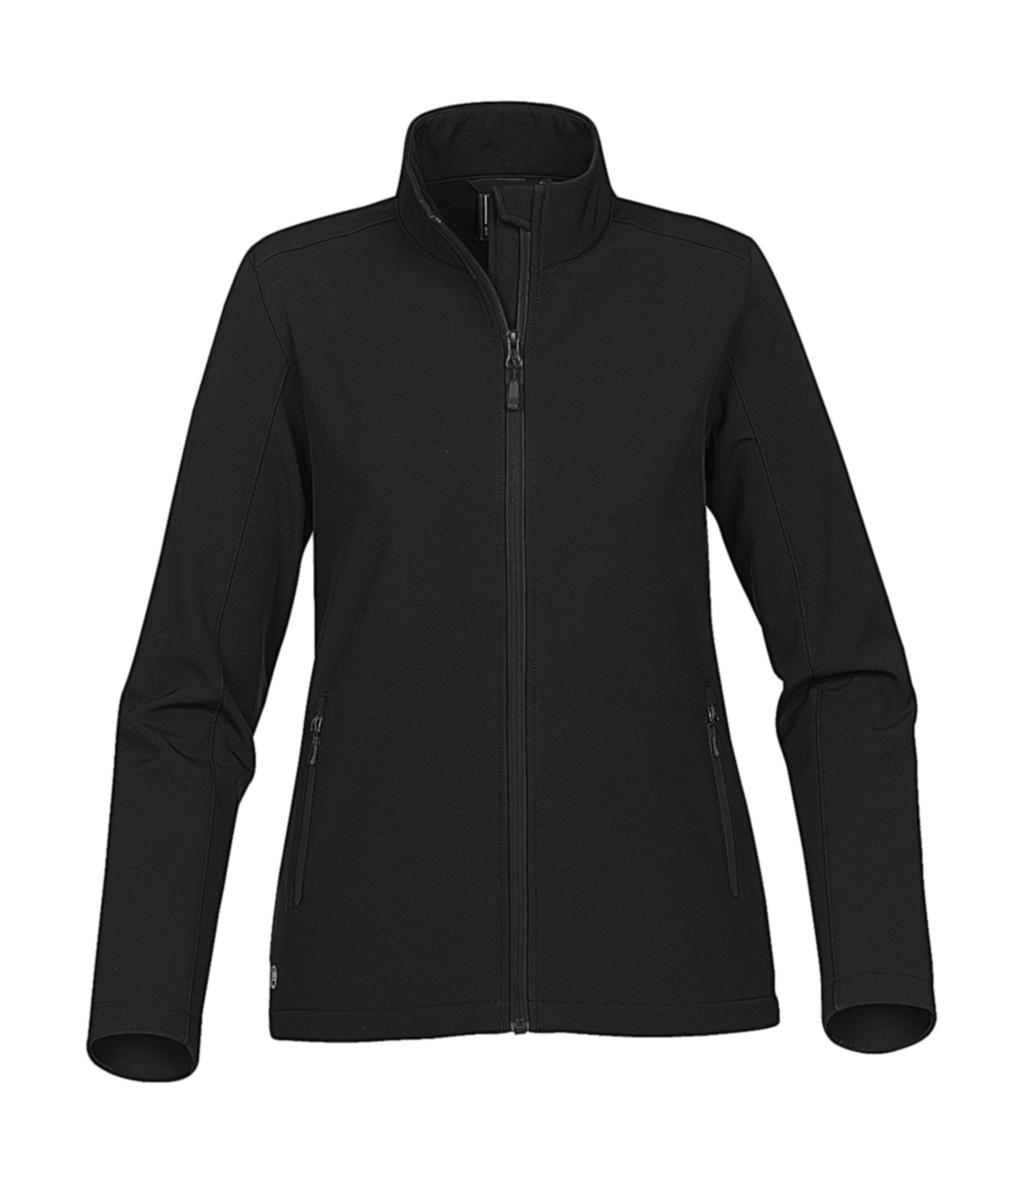  Womens Orbiter Softshell Jacket in Farbe Black/Carbon